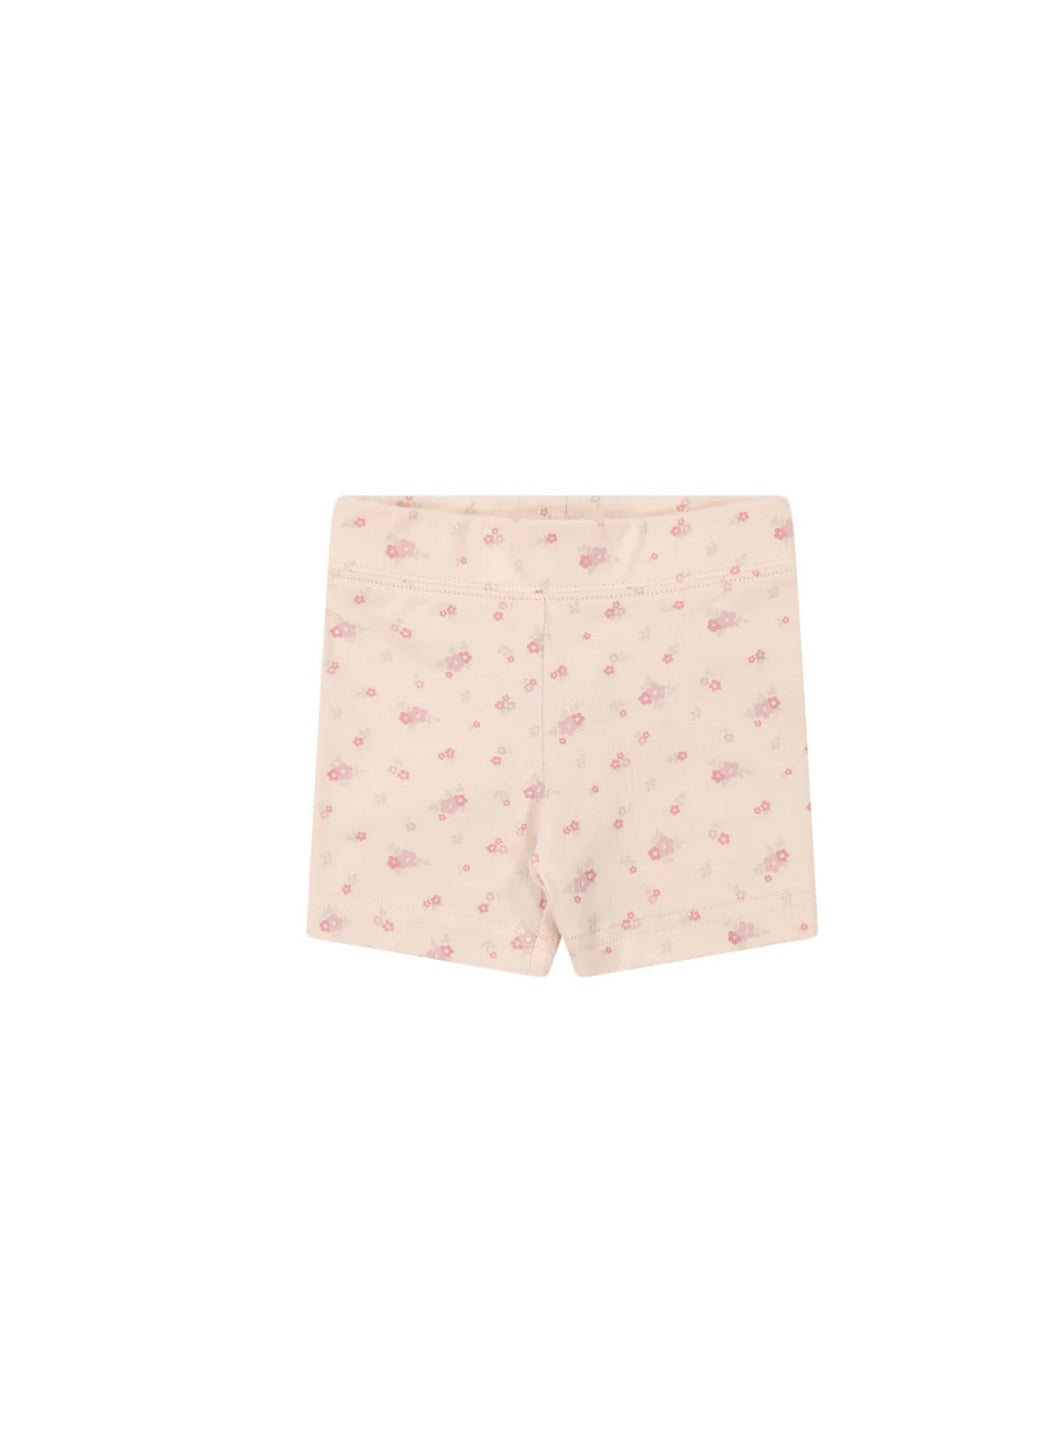 Cindy Whisper Pink Bike Shorts